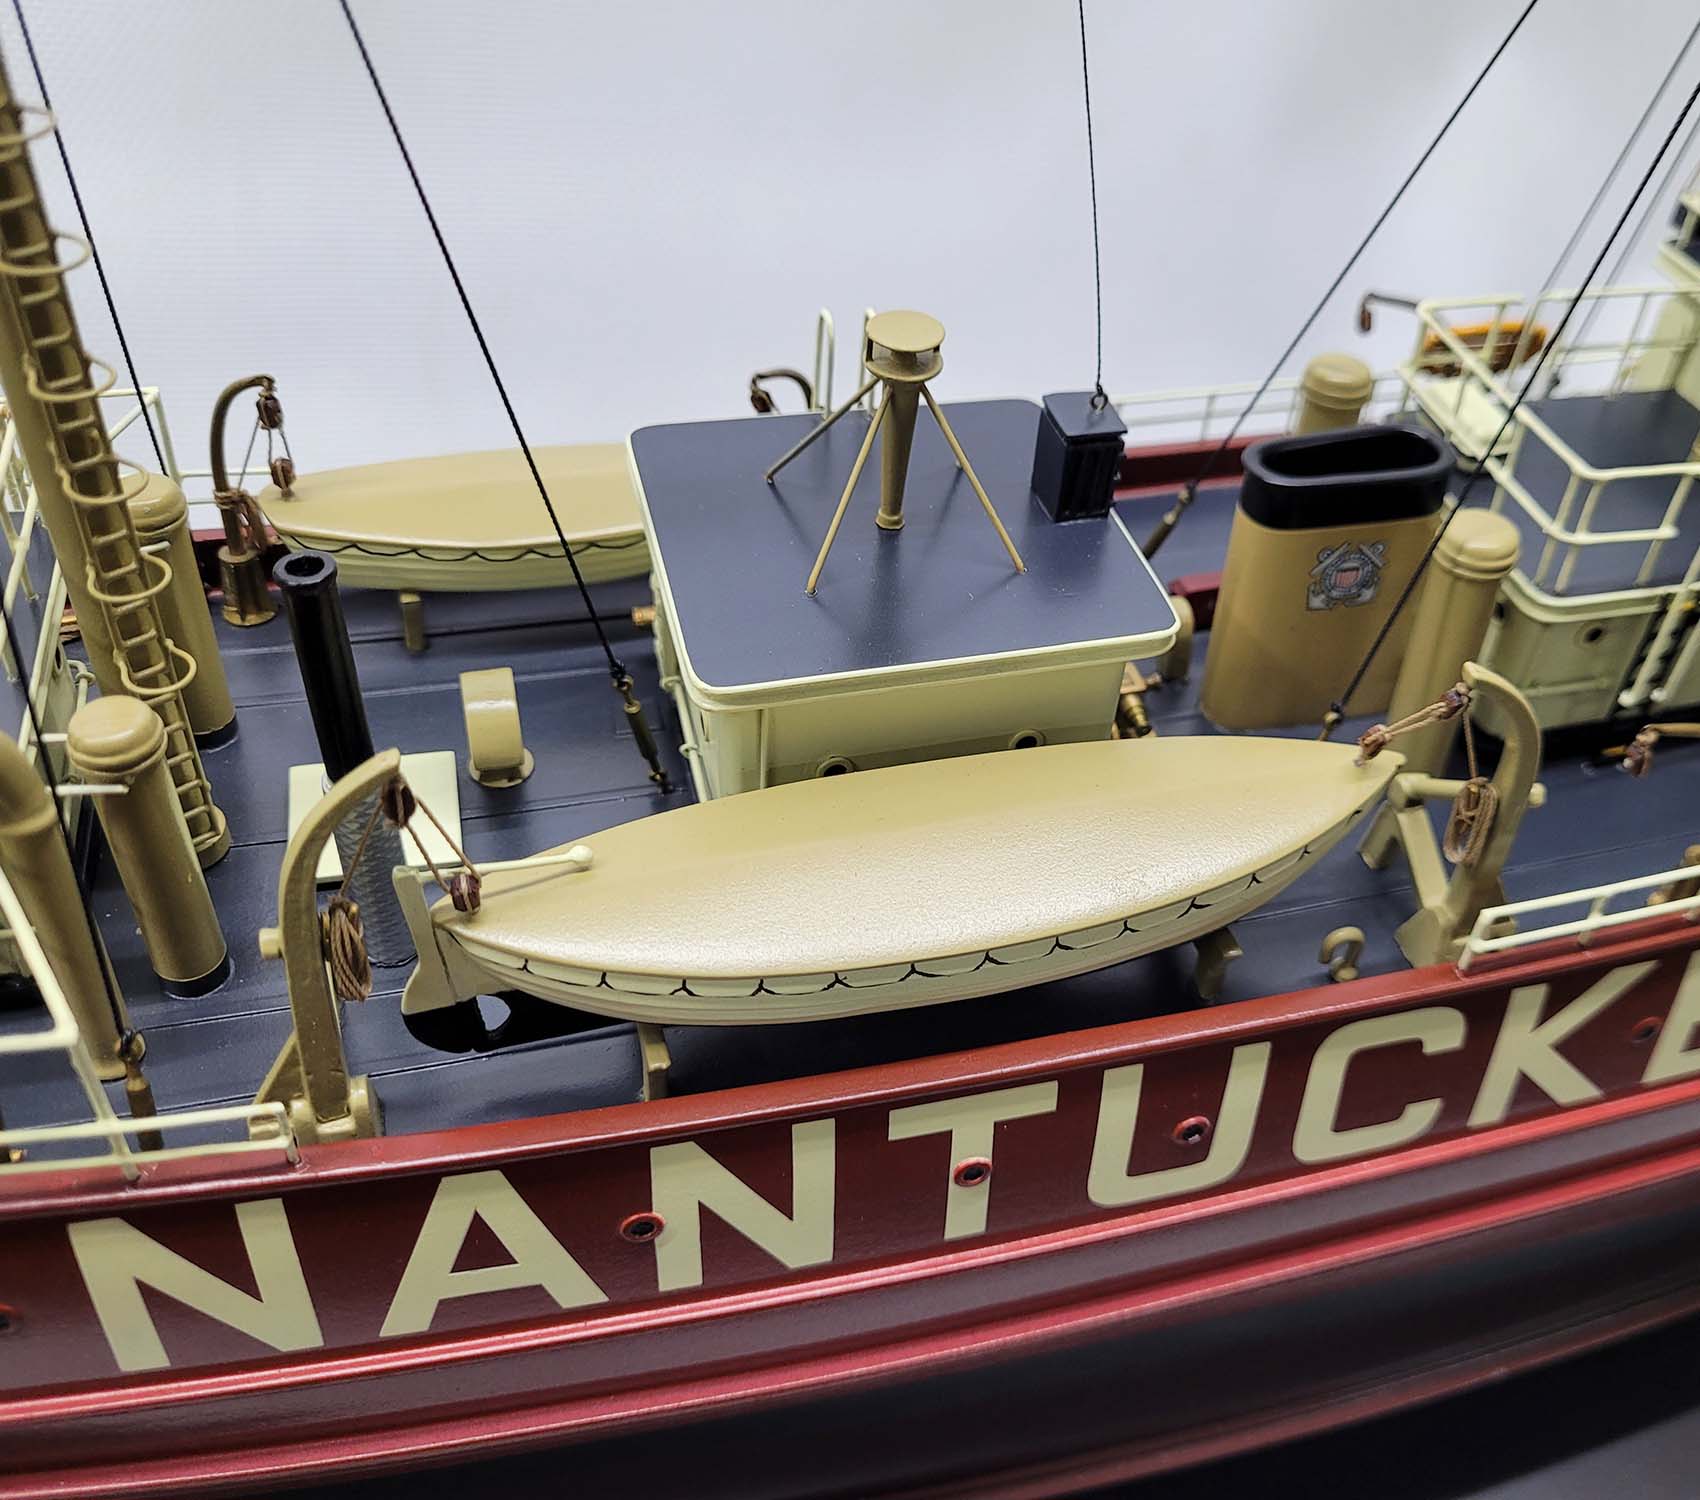 Lightship Nantucket at 1stDibs  nantucket lightship model, the olympic  nantucket collision, nantucket lightship for sale